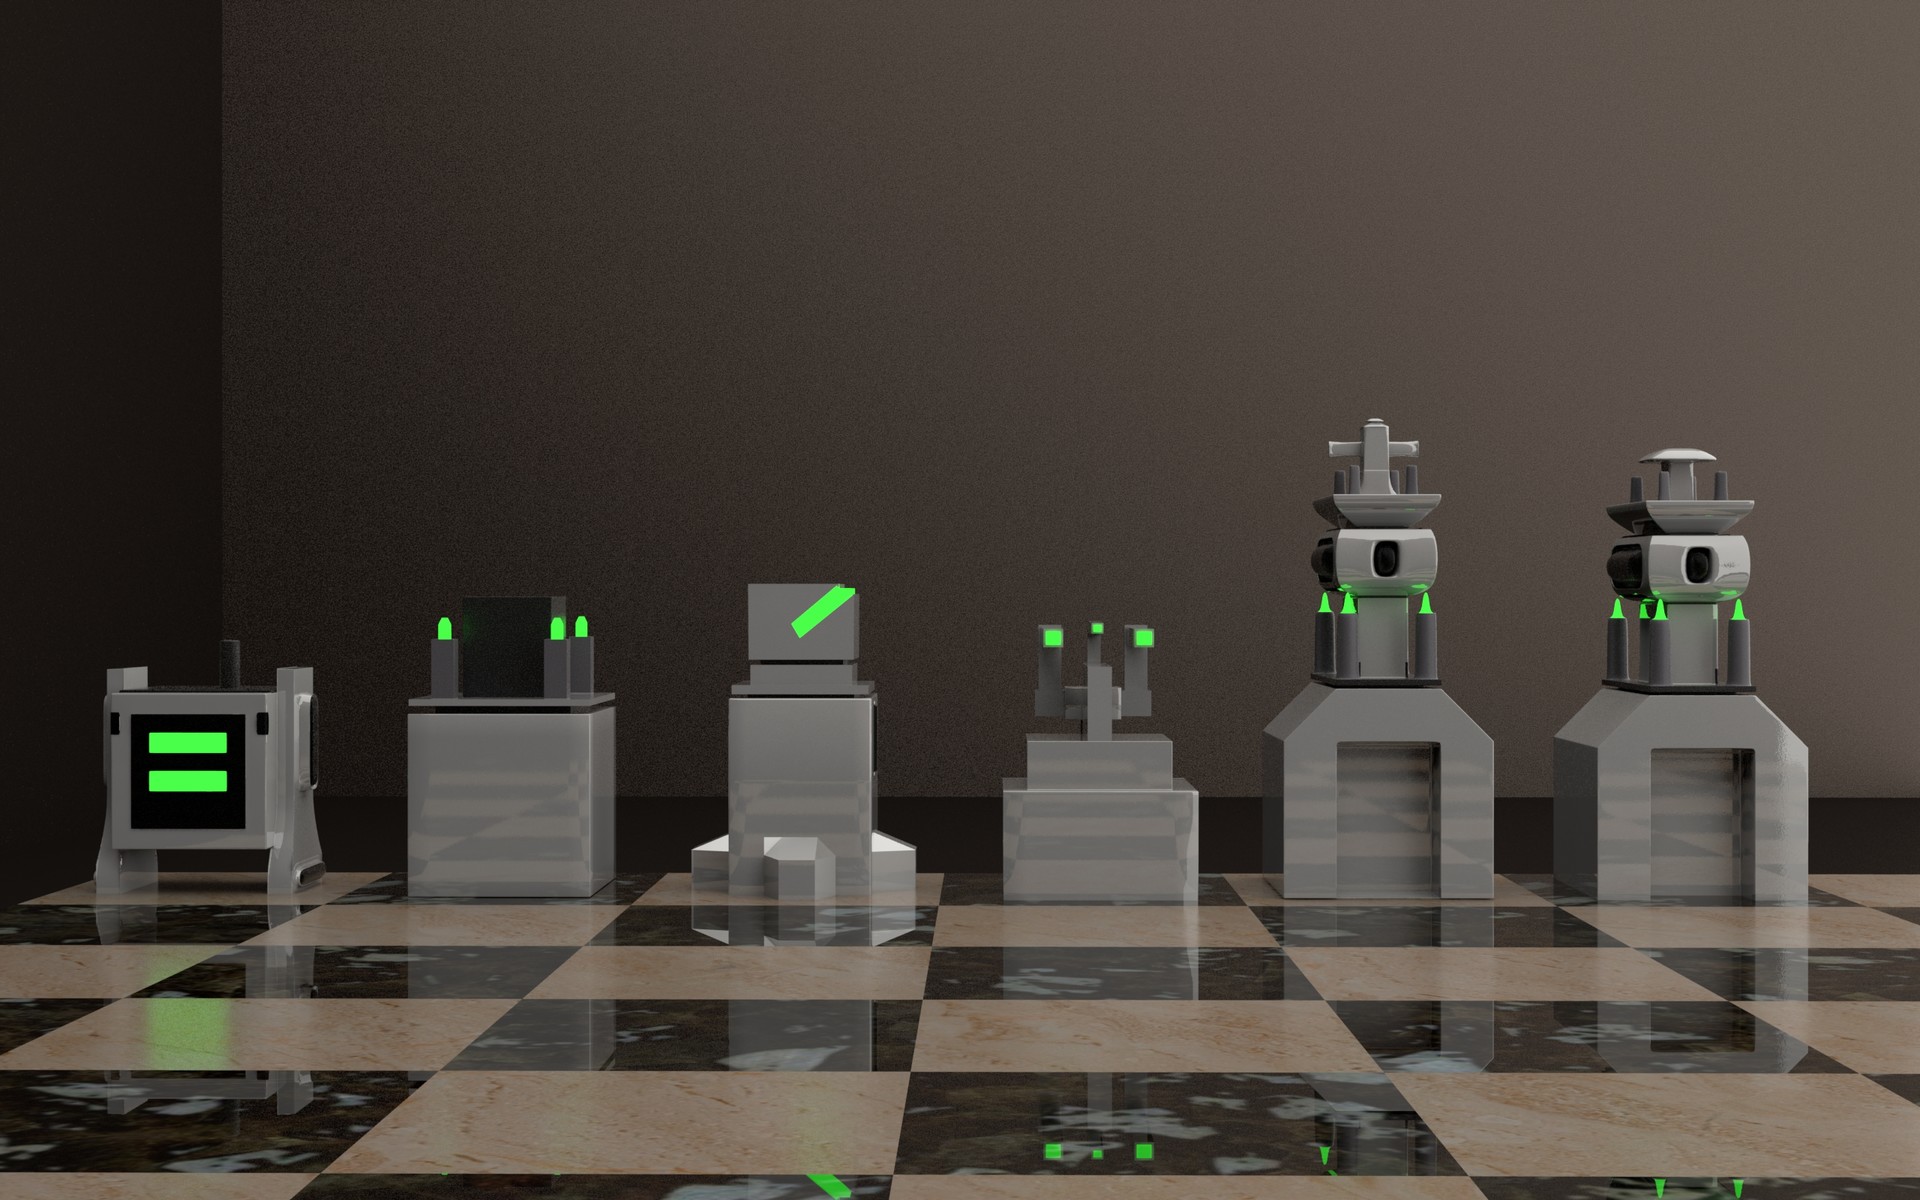 Robotic Chess Board